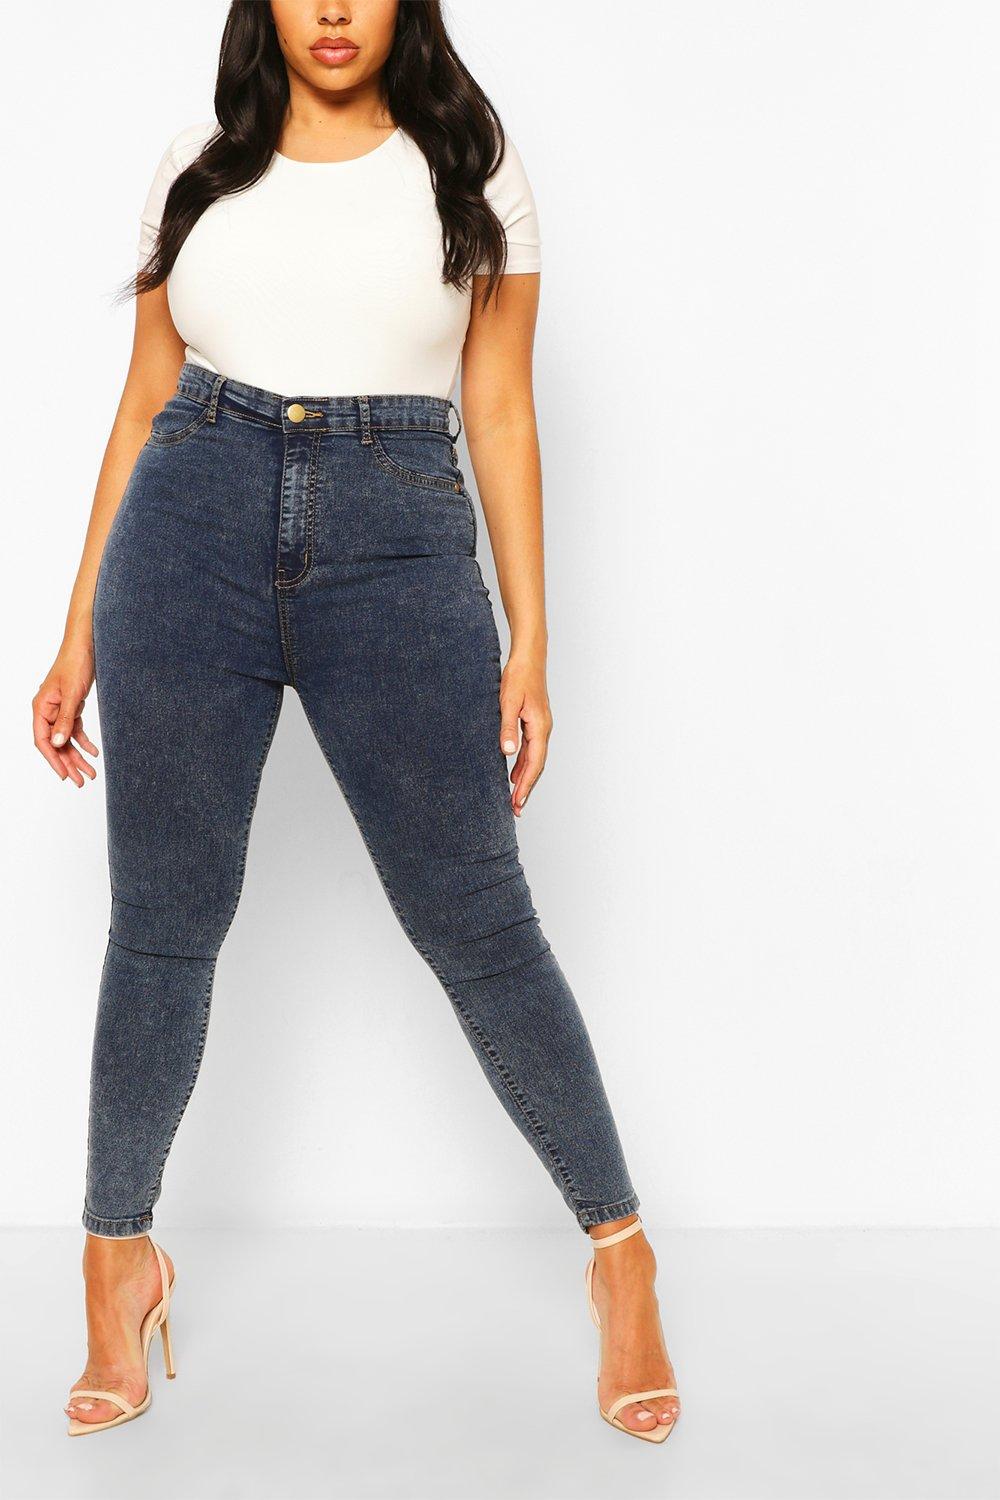 plus size ladies jeans uk